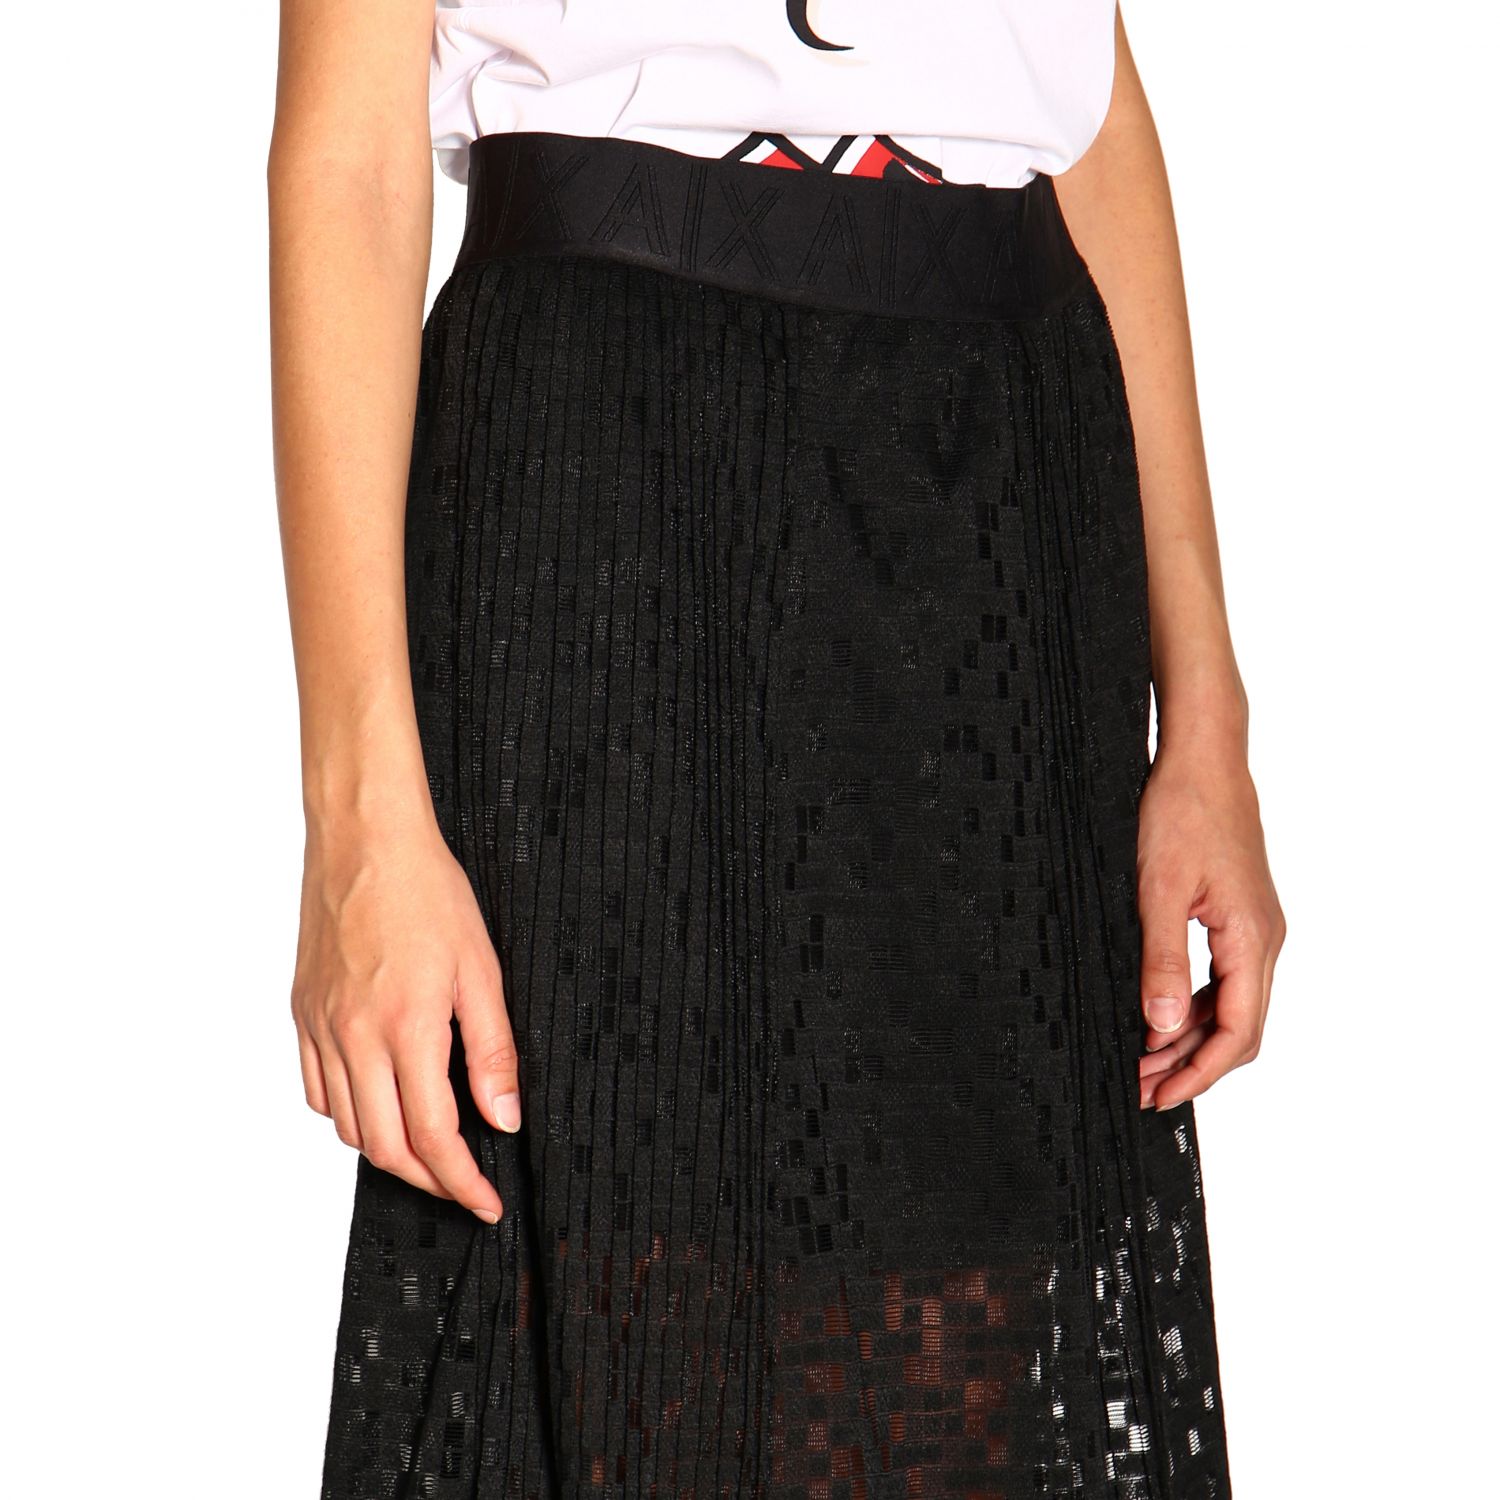 Armani Exchange Outlet: skirt for woman - Black | Armani Exchange skirt ...